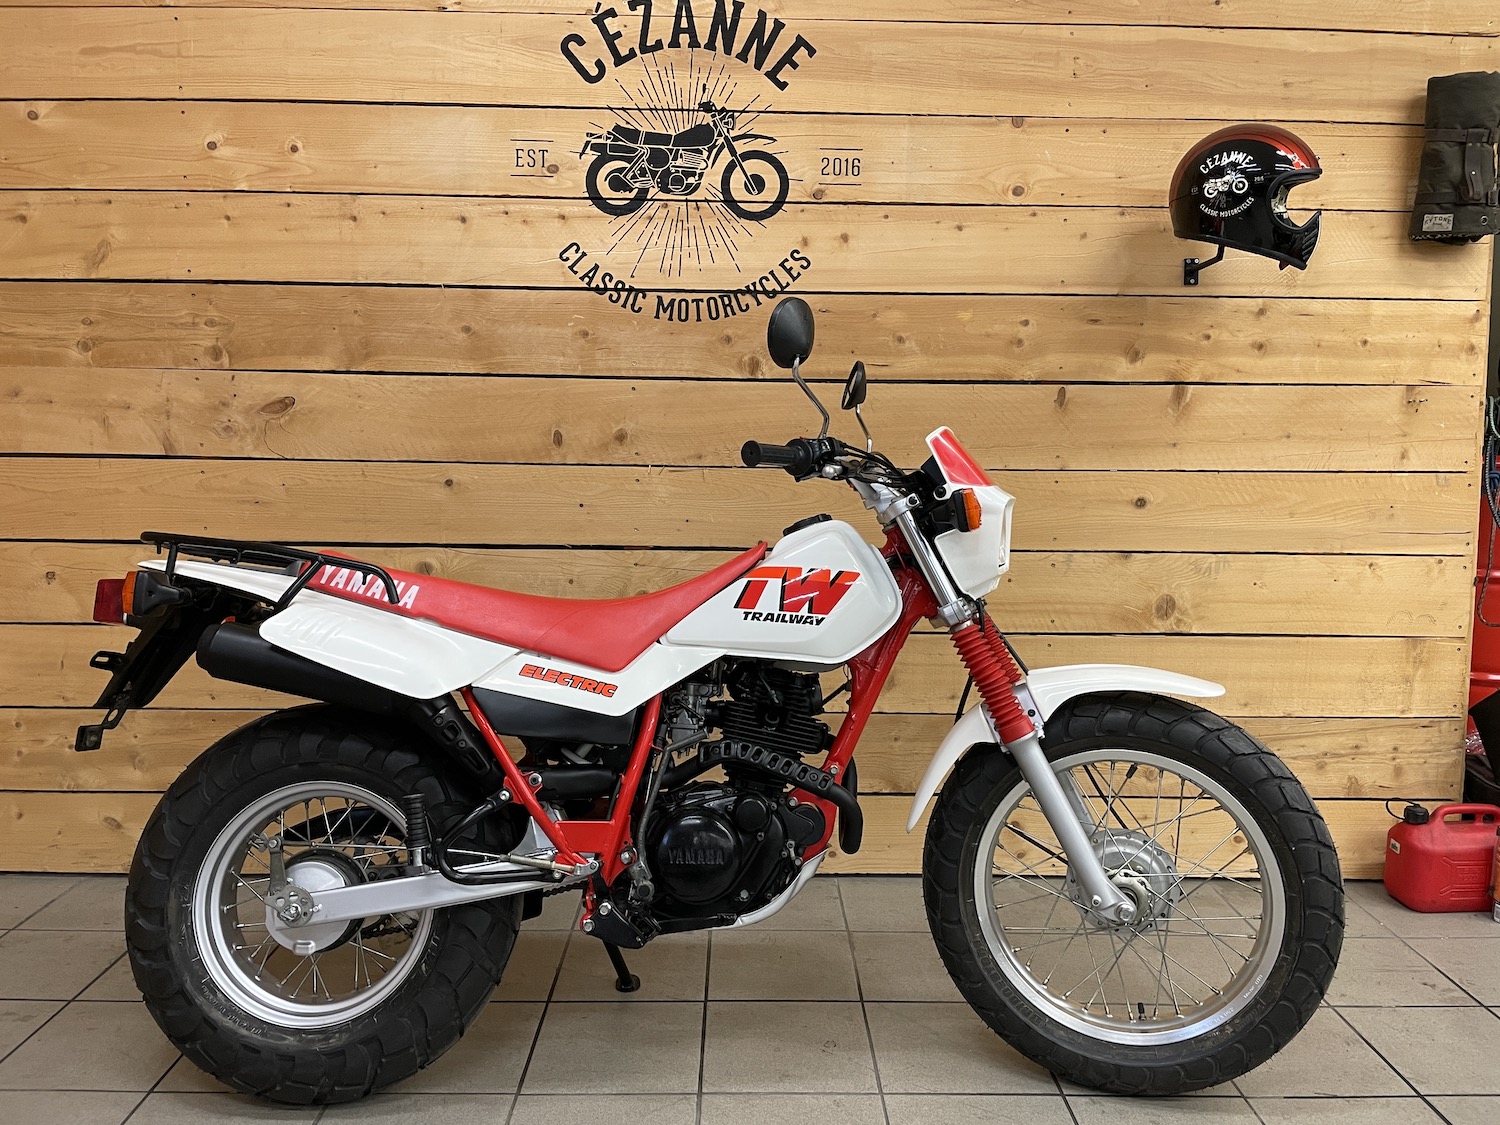 Yamaha_TW200_cezanne_classic_motorcycle-108.jpg